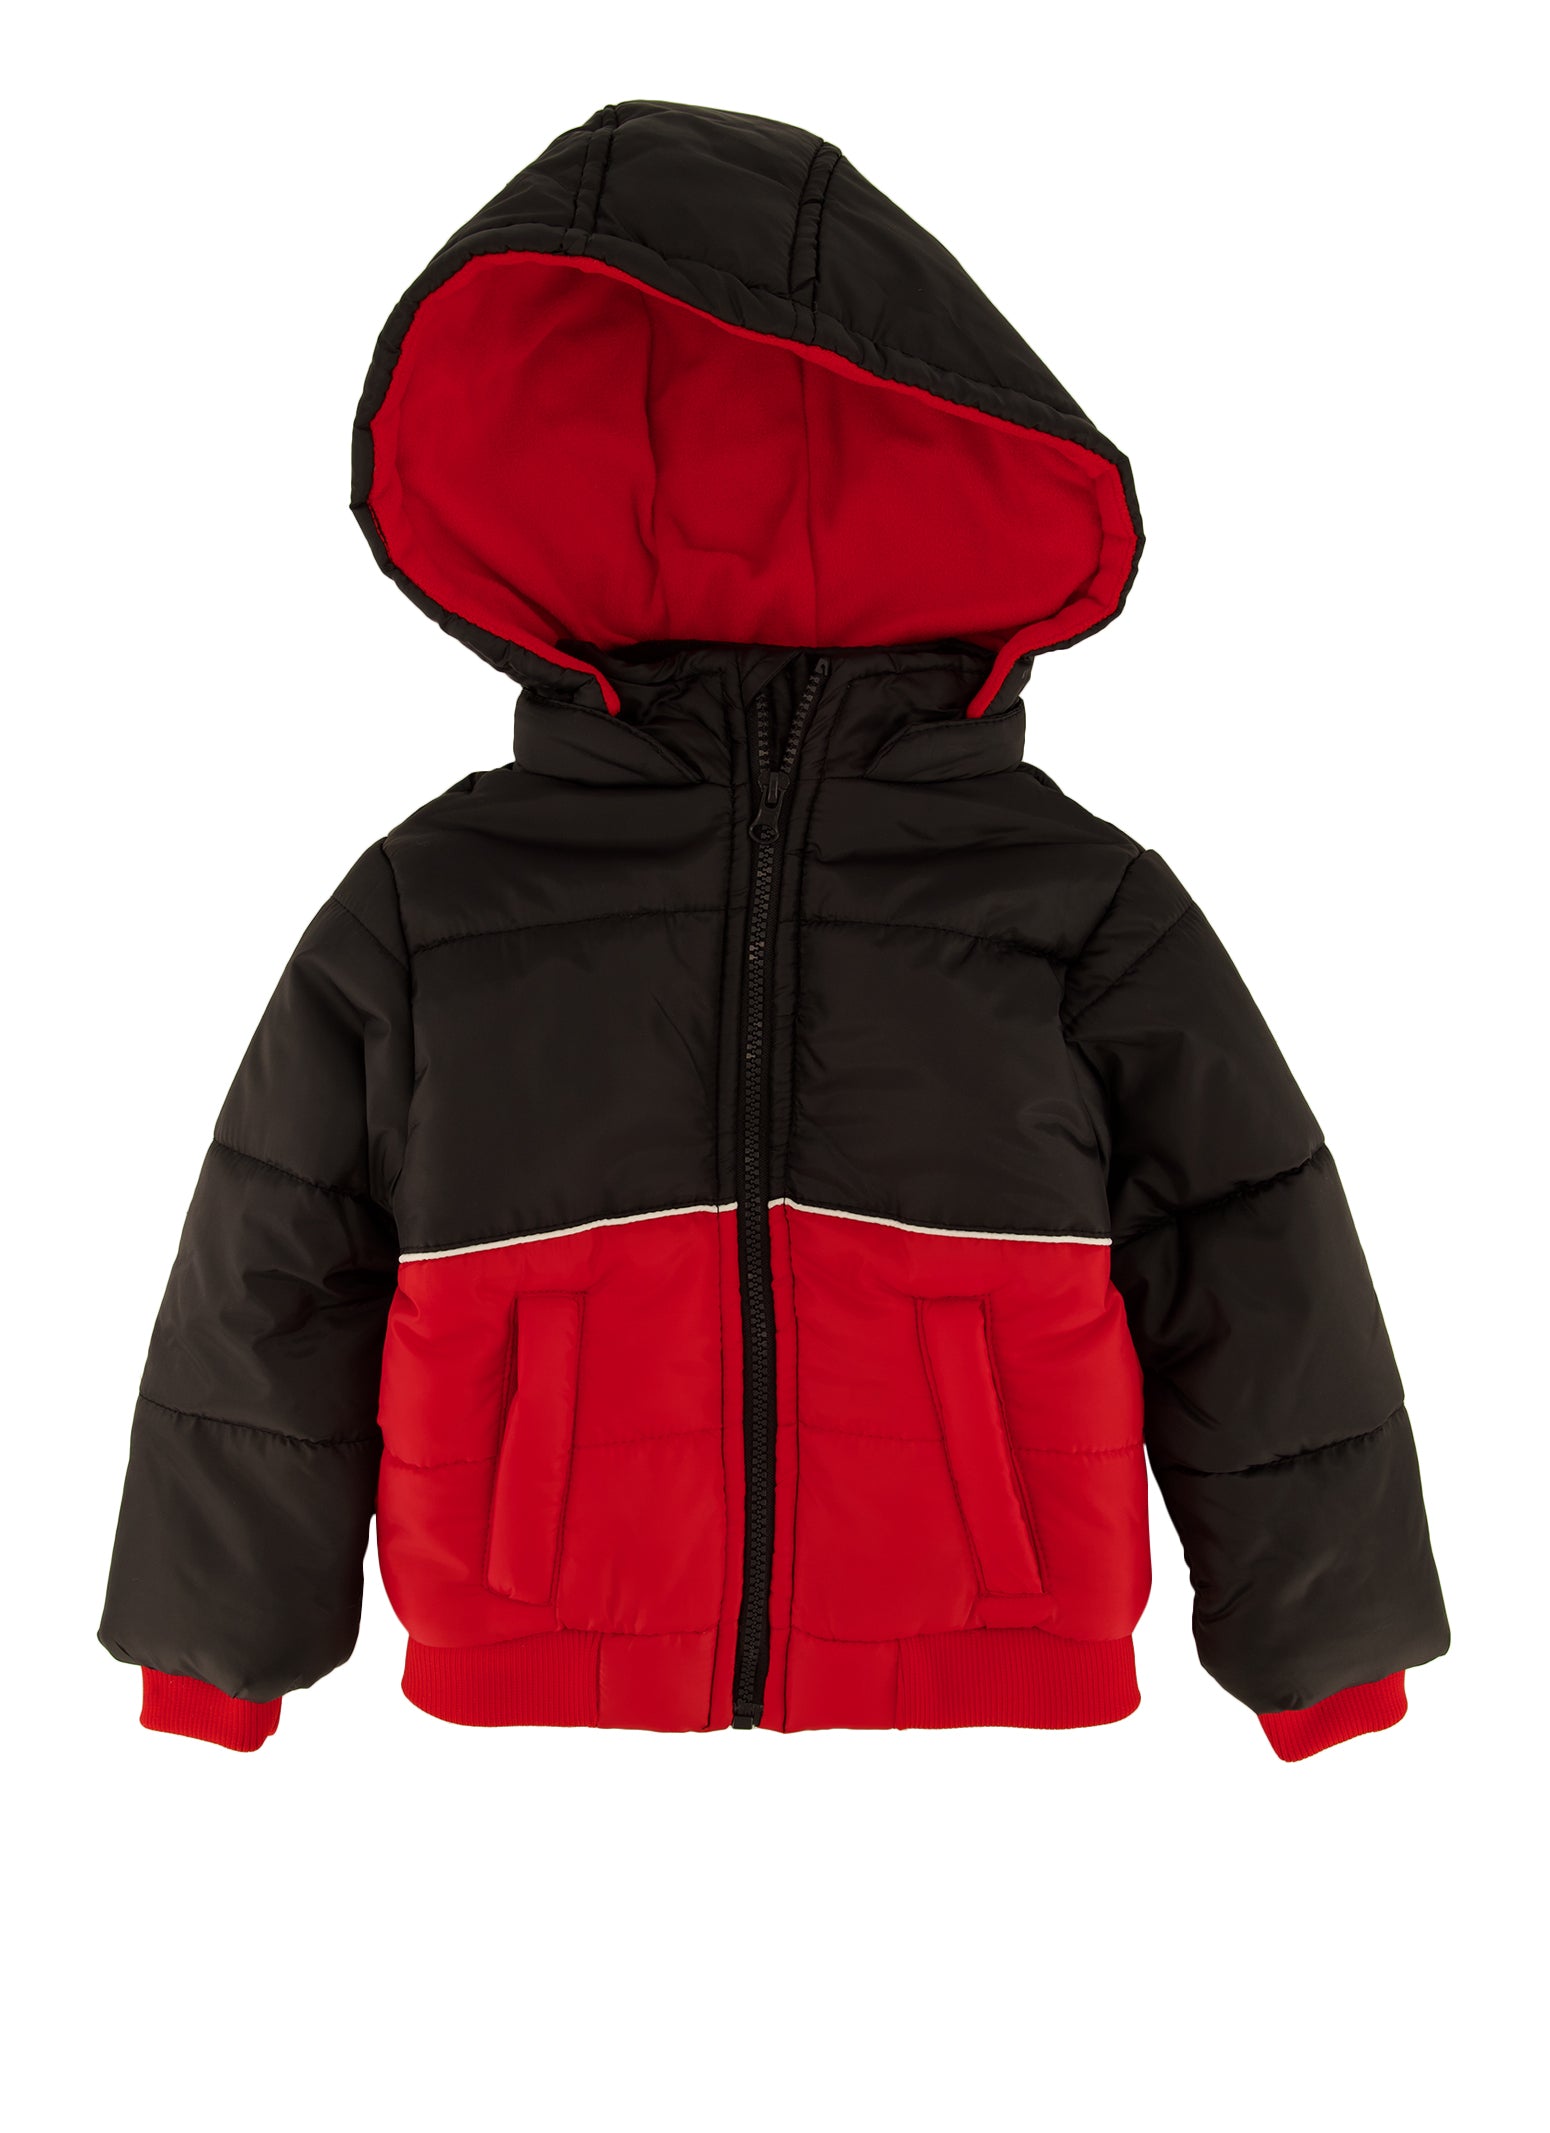 Toddler Boys Zip Front Hooded Puffer Jacket, Black,